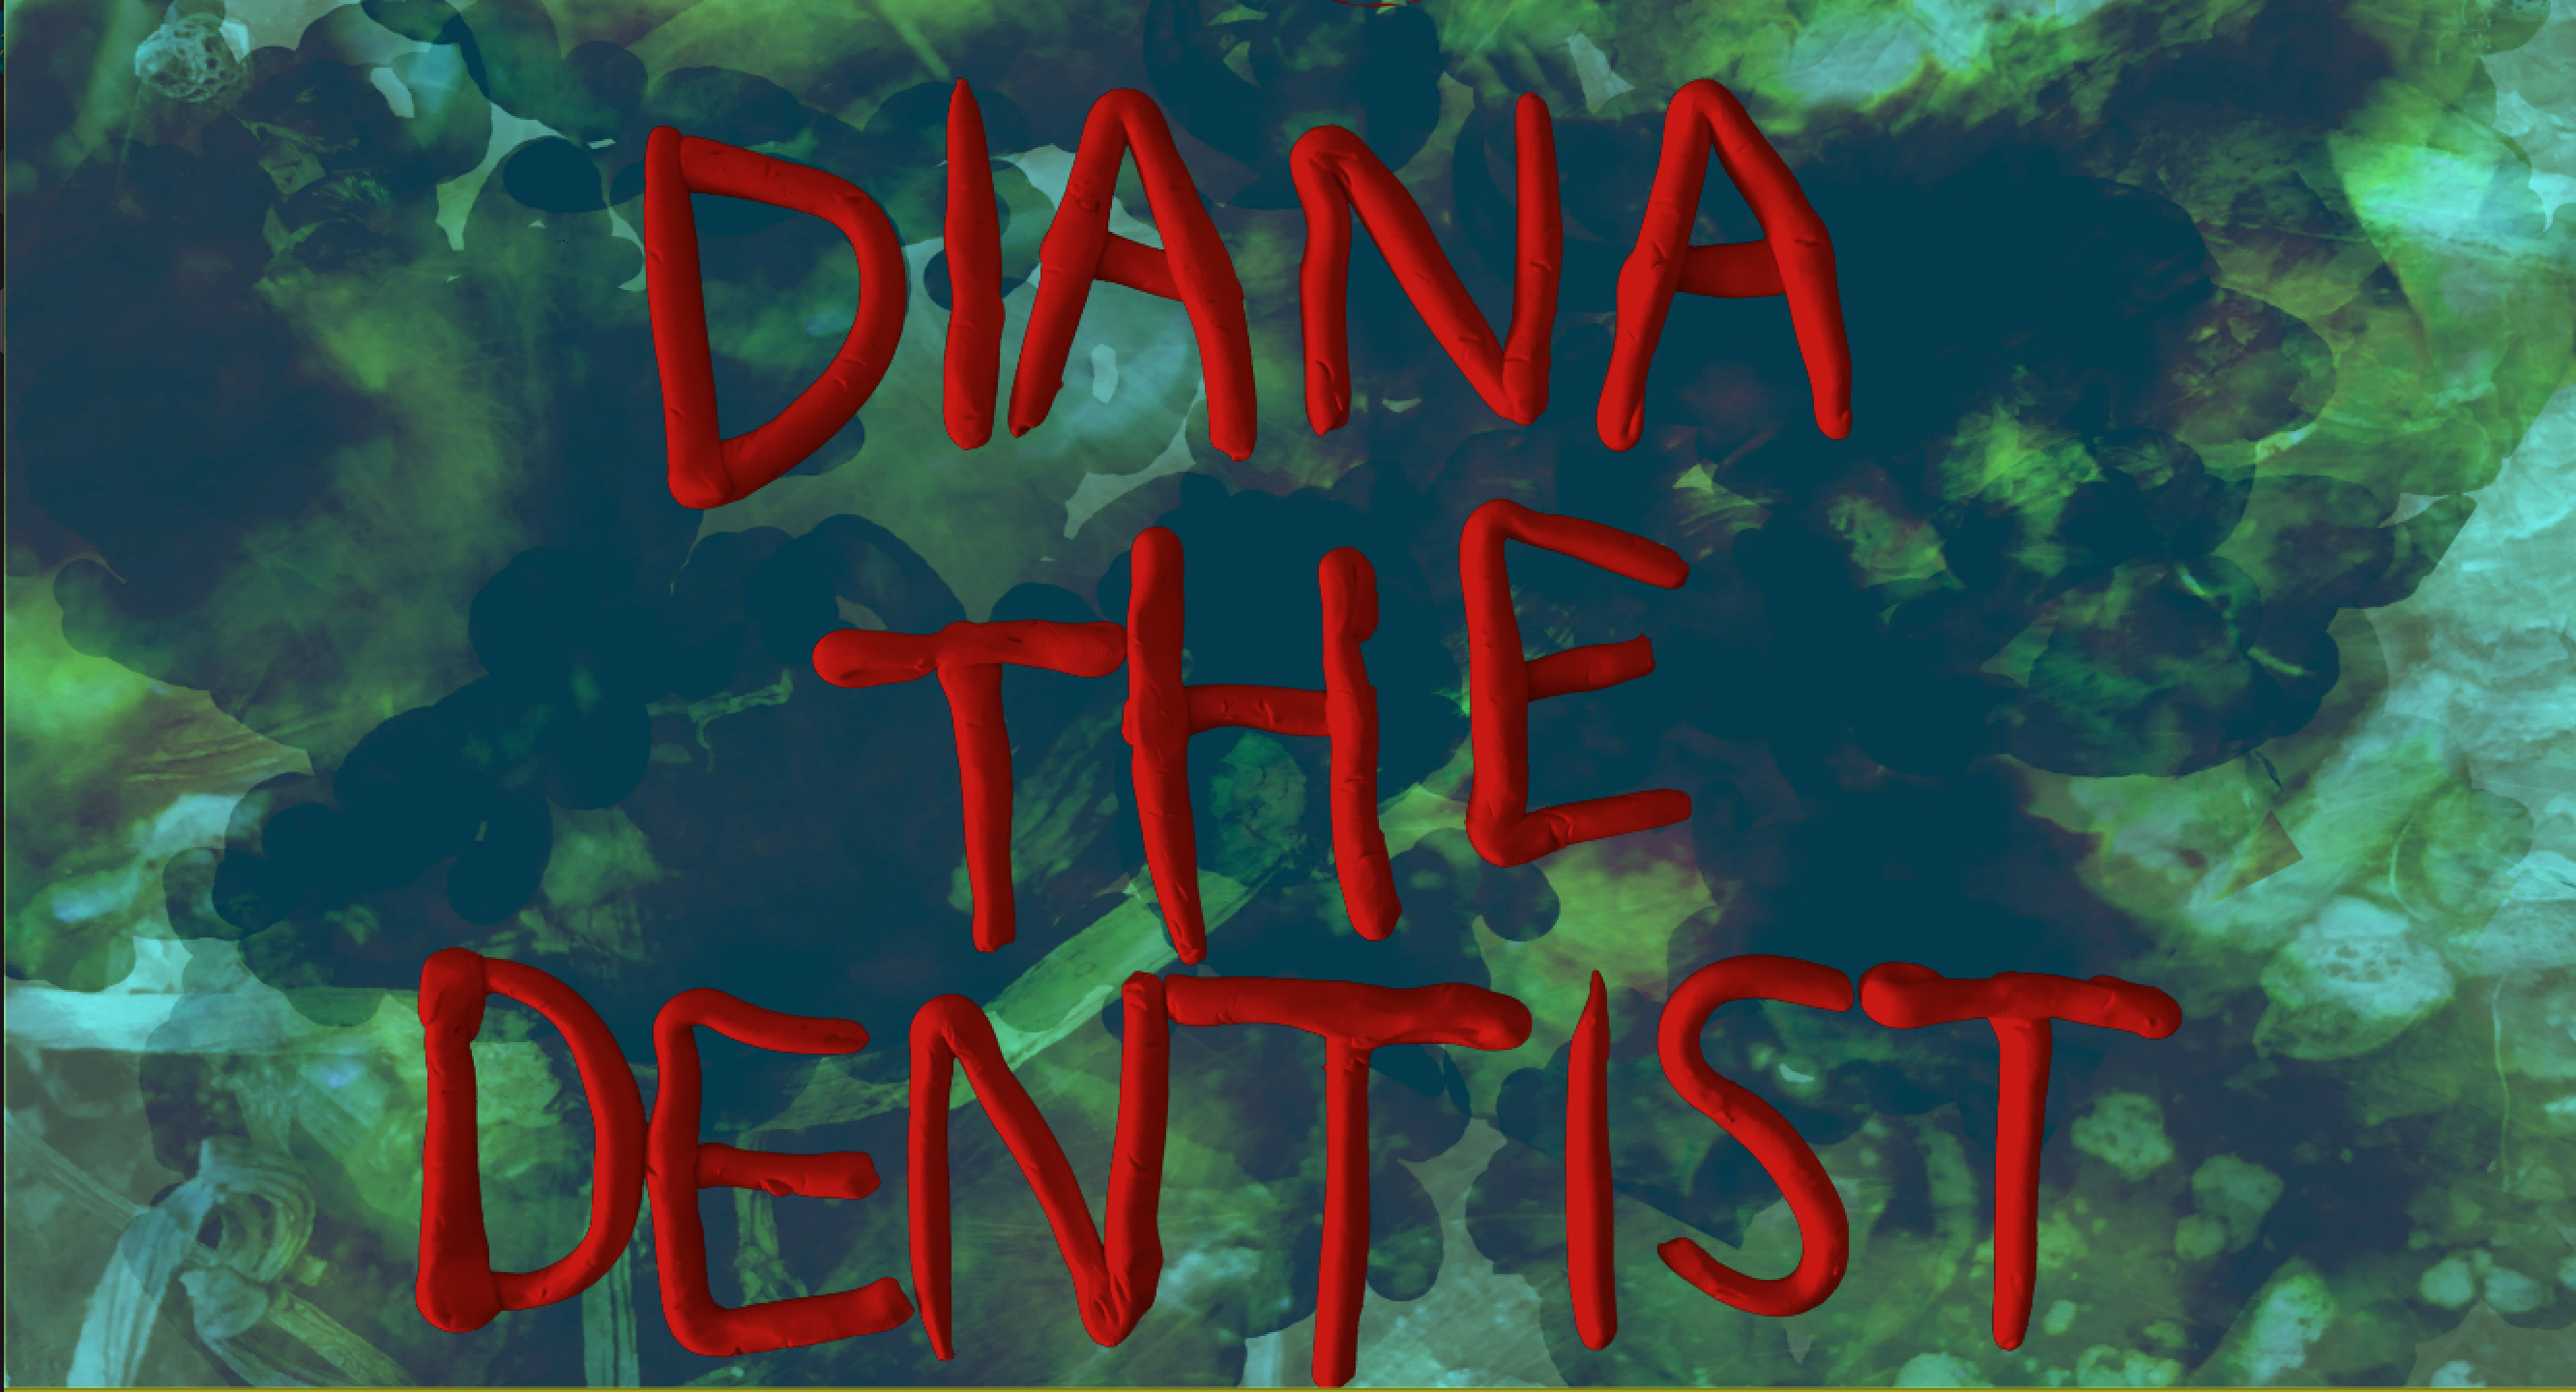 Diana The Dentist